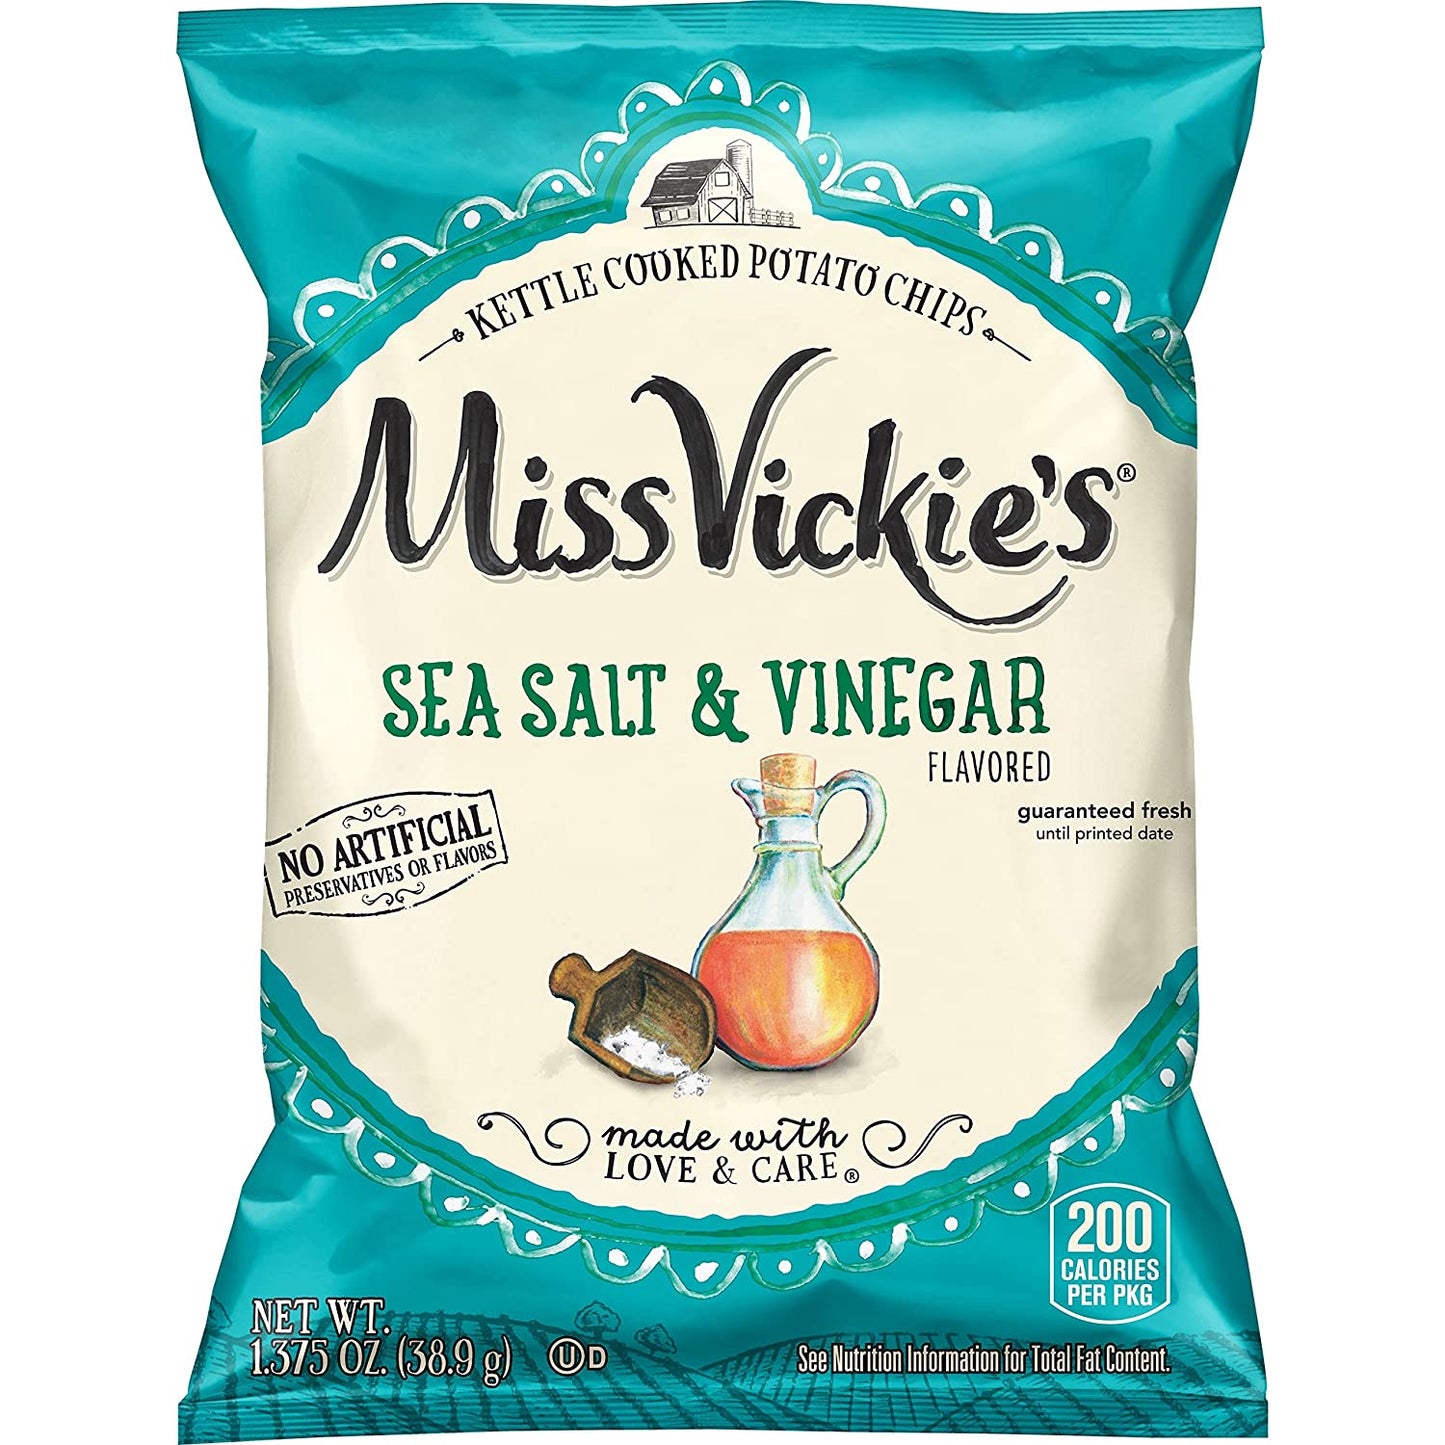 miss vickie's flavored potato chips, salt & vinegar